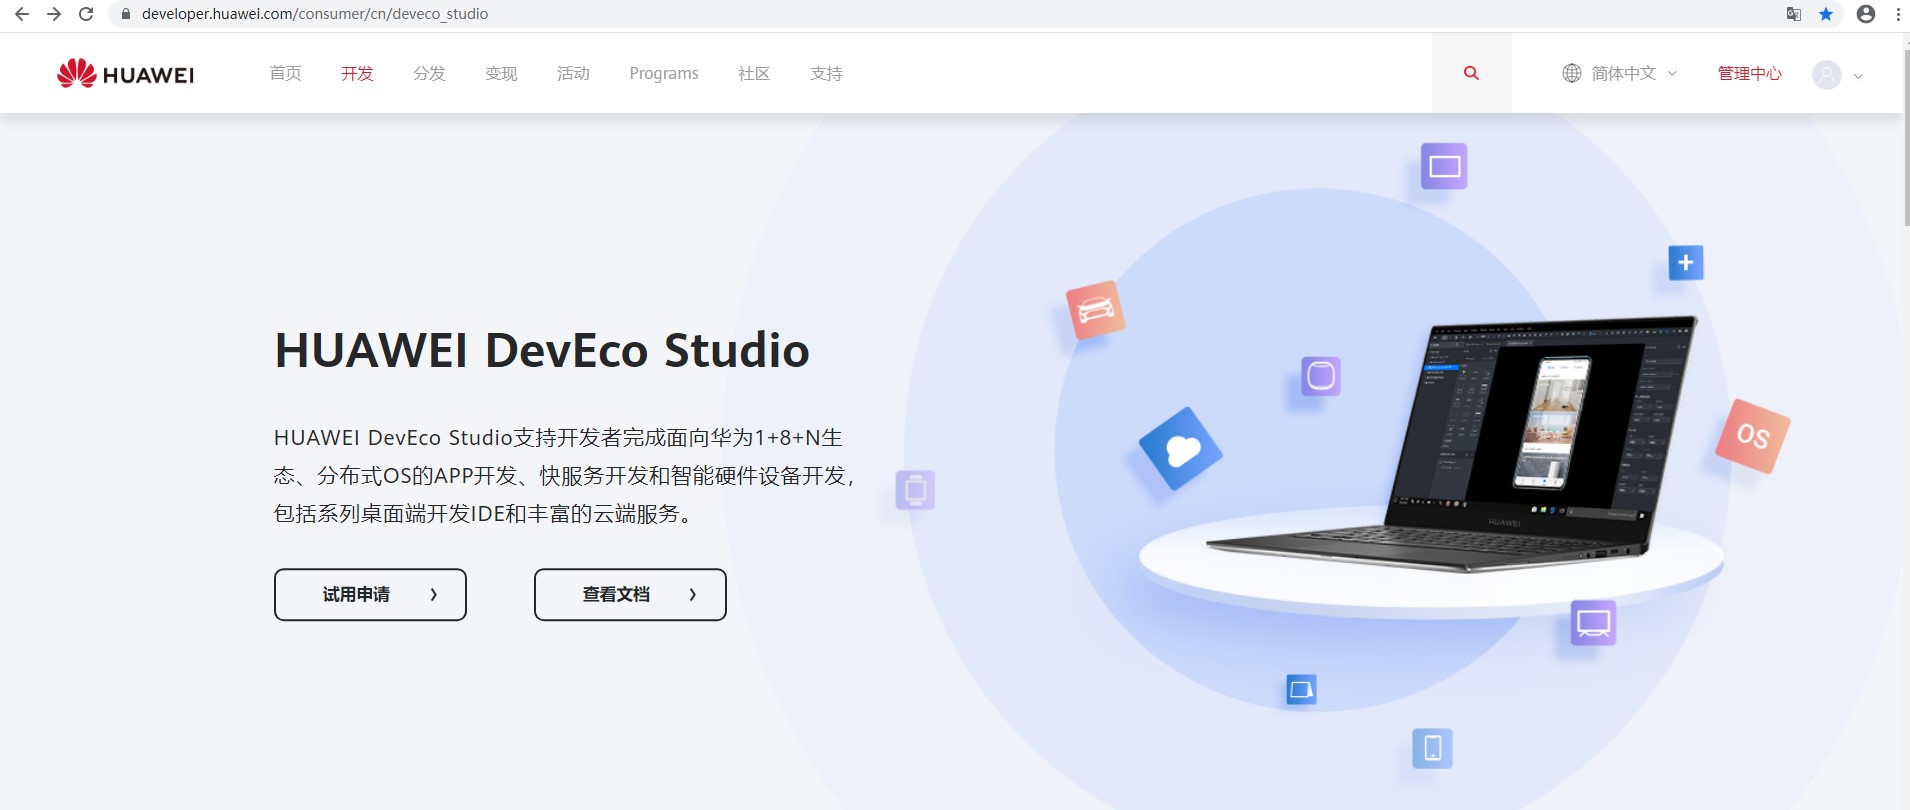 DevEco Studio使用指南上新篇-移动设备管理（MDM）-鸿蒙开发者社区